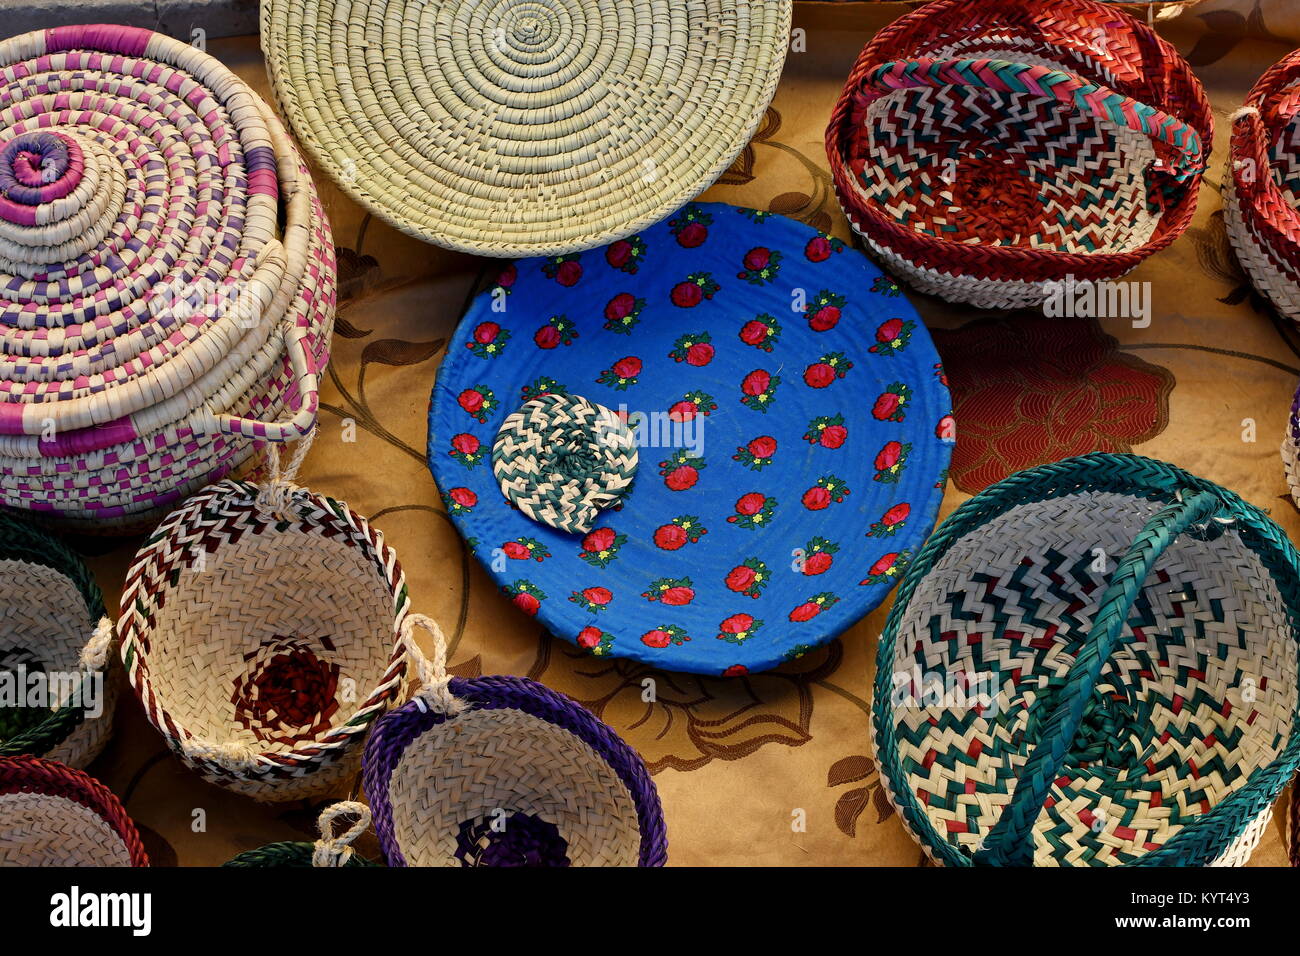 Saudi Arabia Arts and Crafts Handmade Stock Photo - Alamy